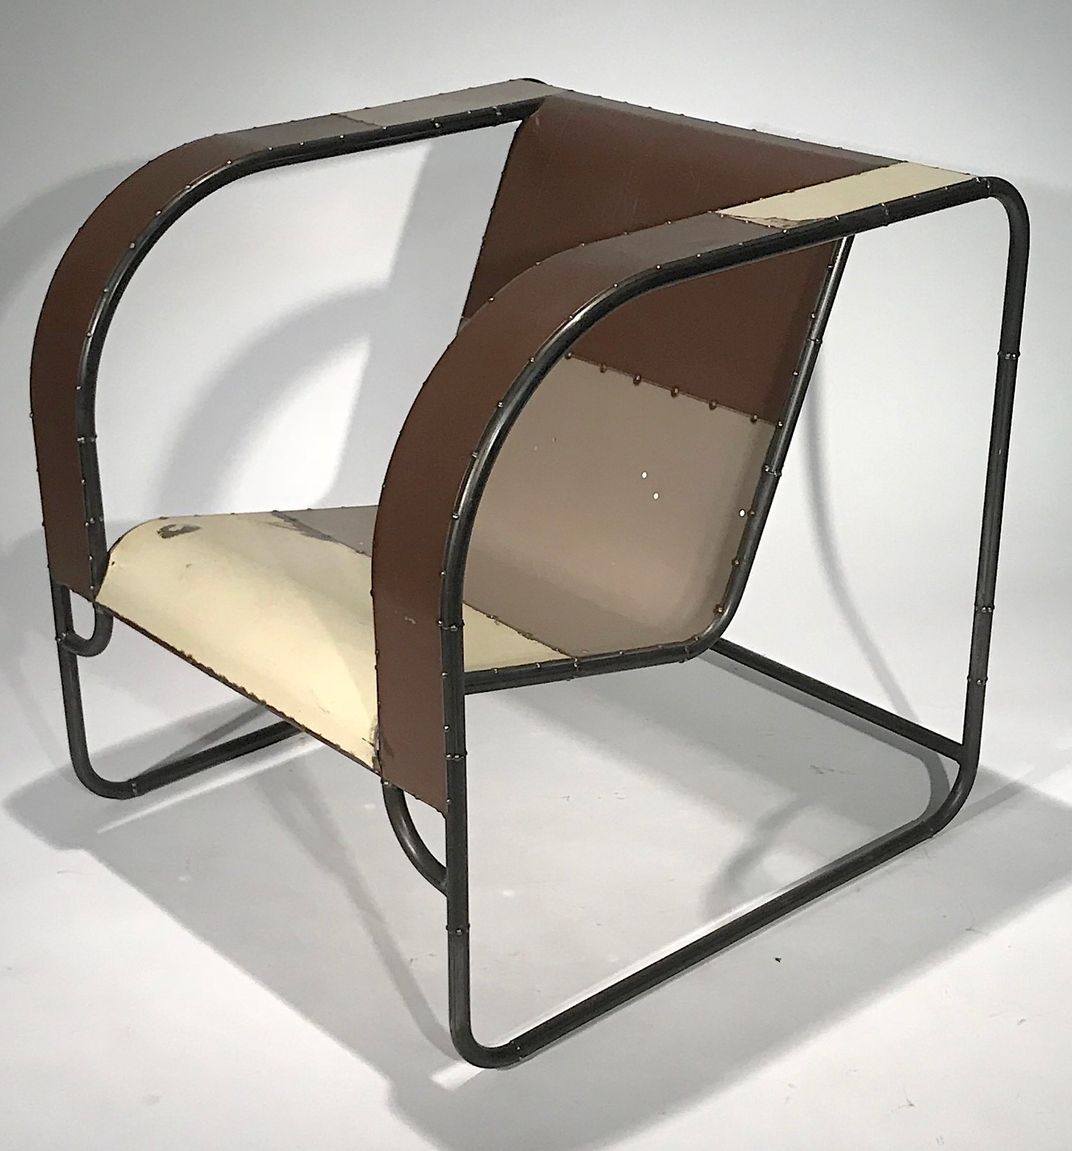 Metal Chair by Doug Meyer